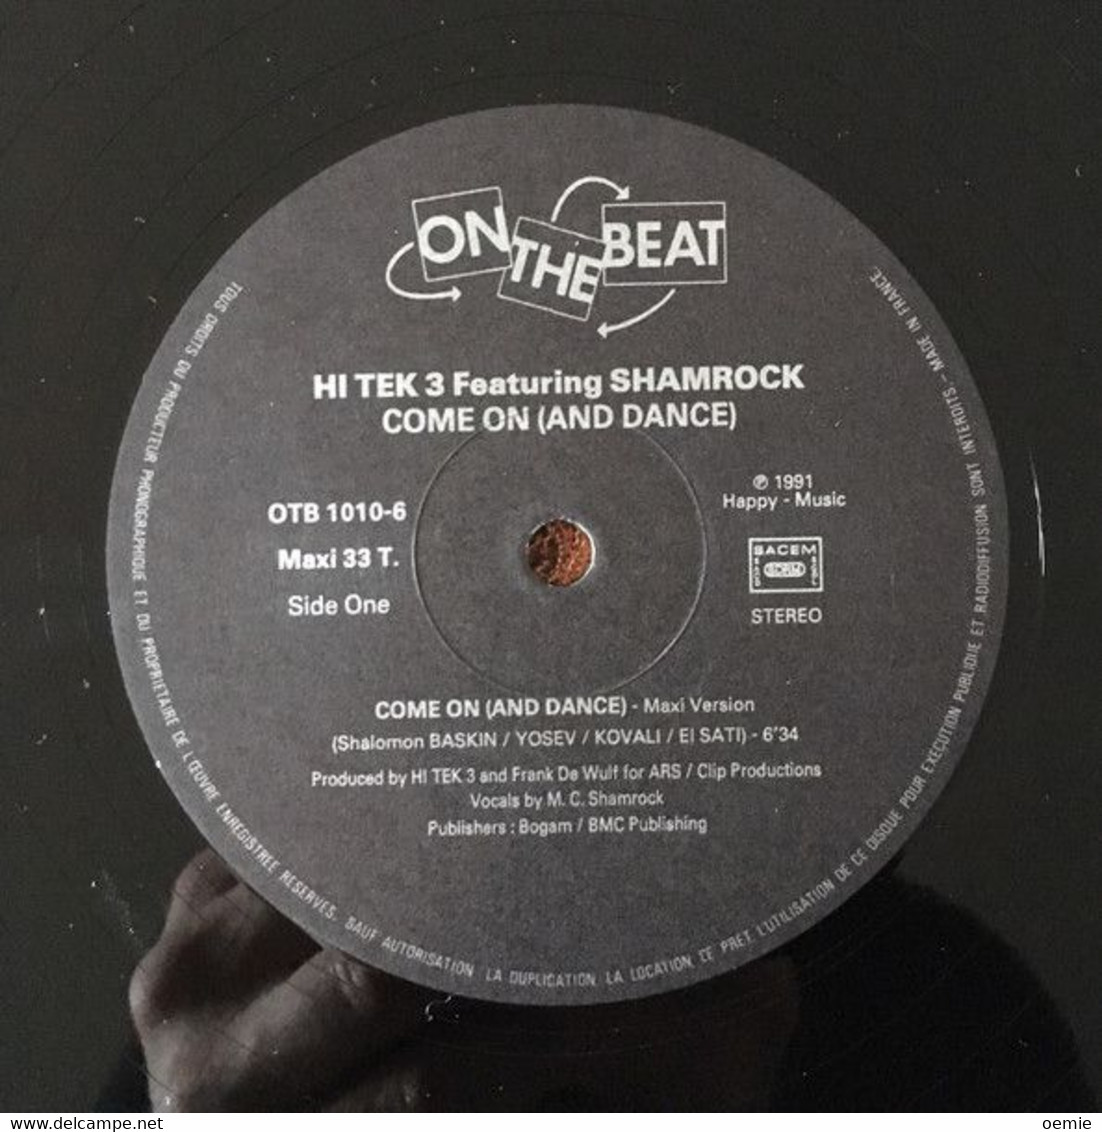 HI TEK 3 FEATURING  MCSHAMROCK  /  COMEON AND DANCE - 45 T - Maxi-Single